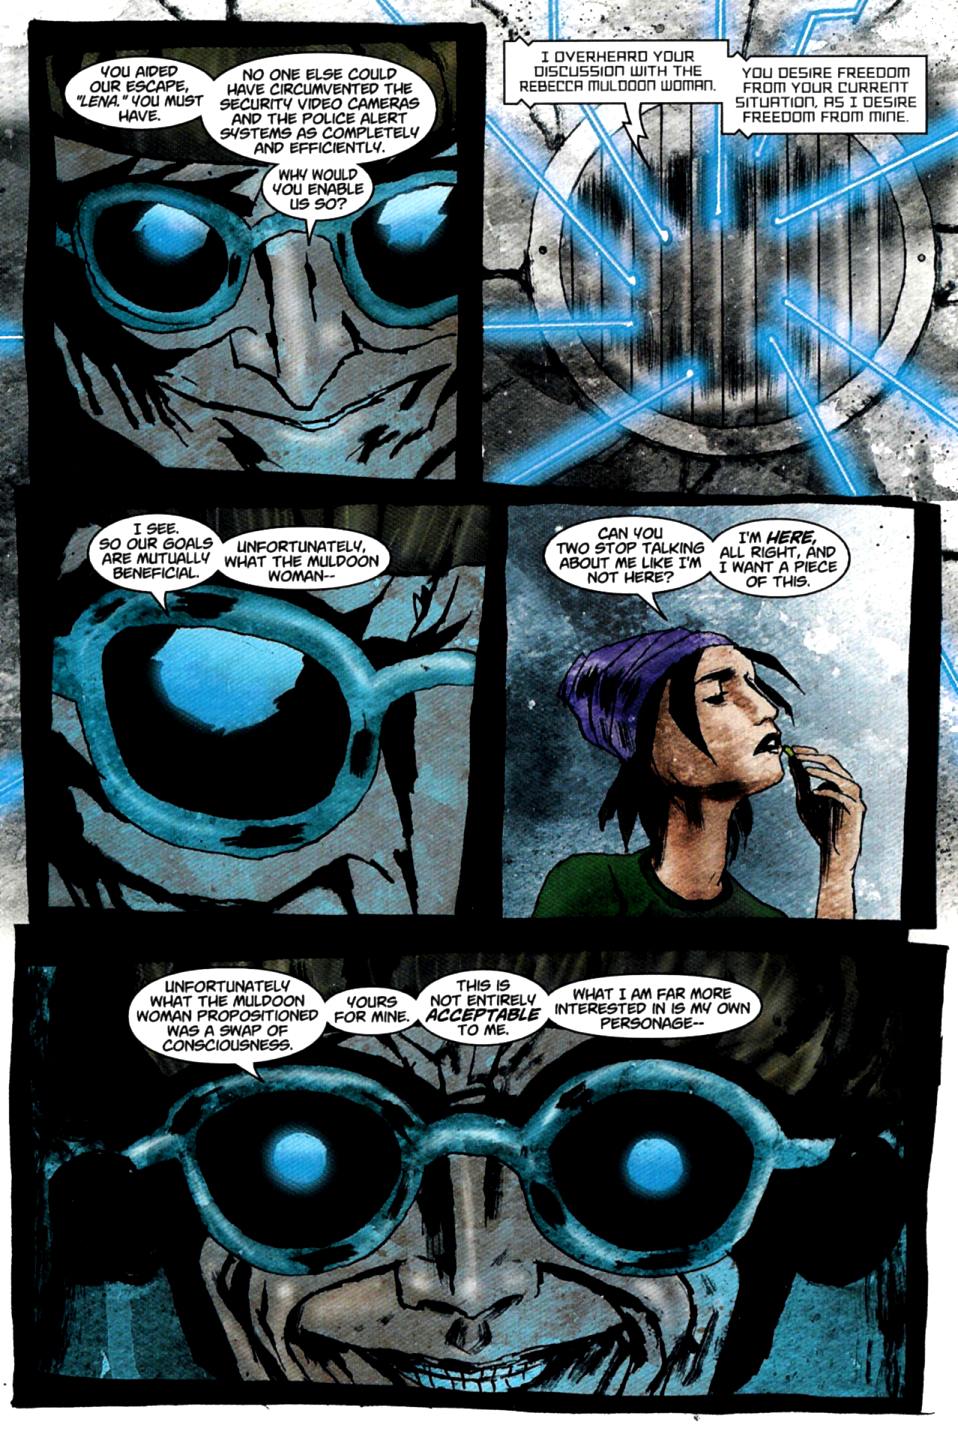 Read online Superman: Metropolis comic -  Issue #8 - 2